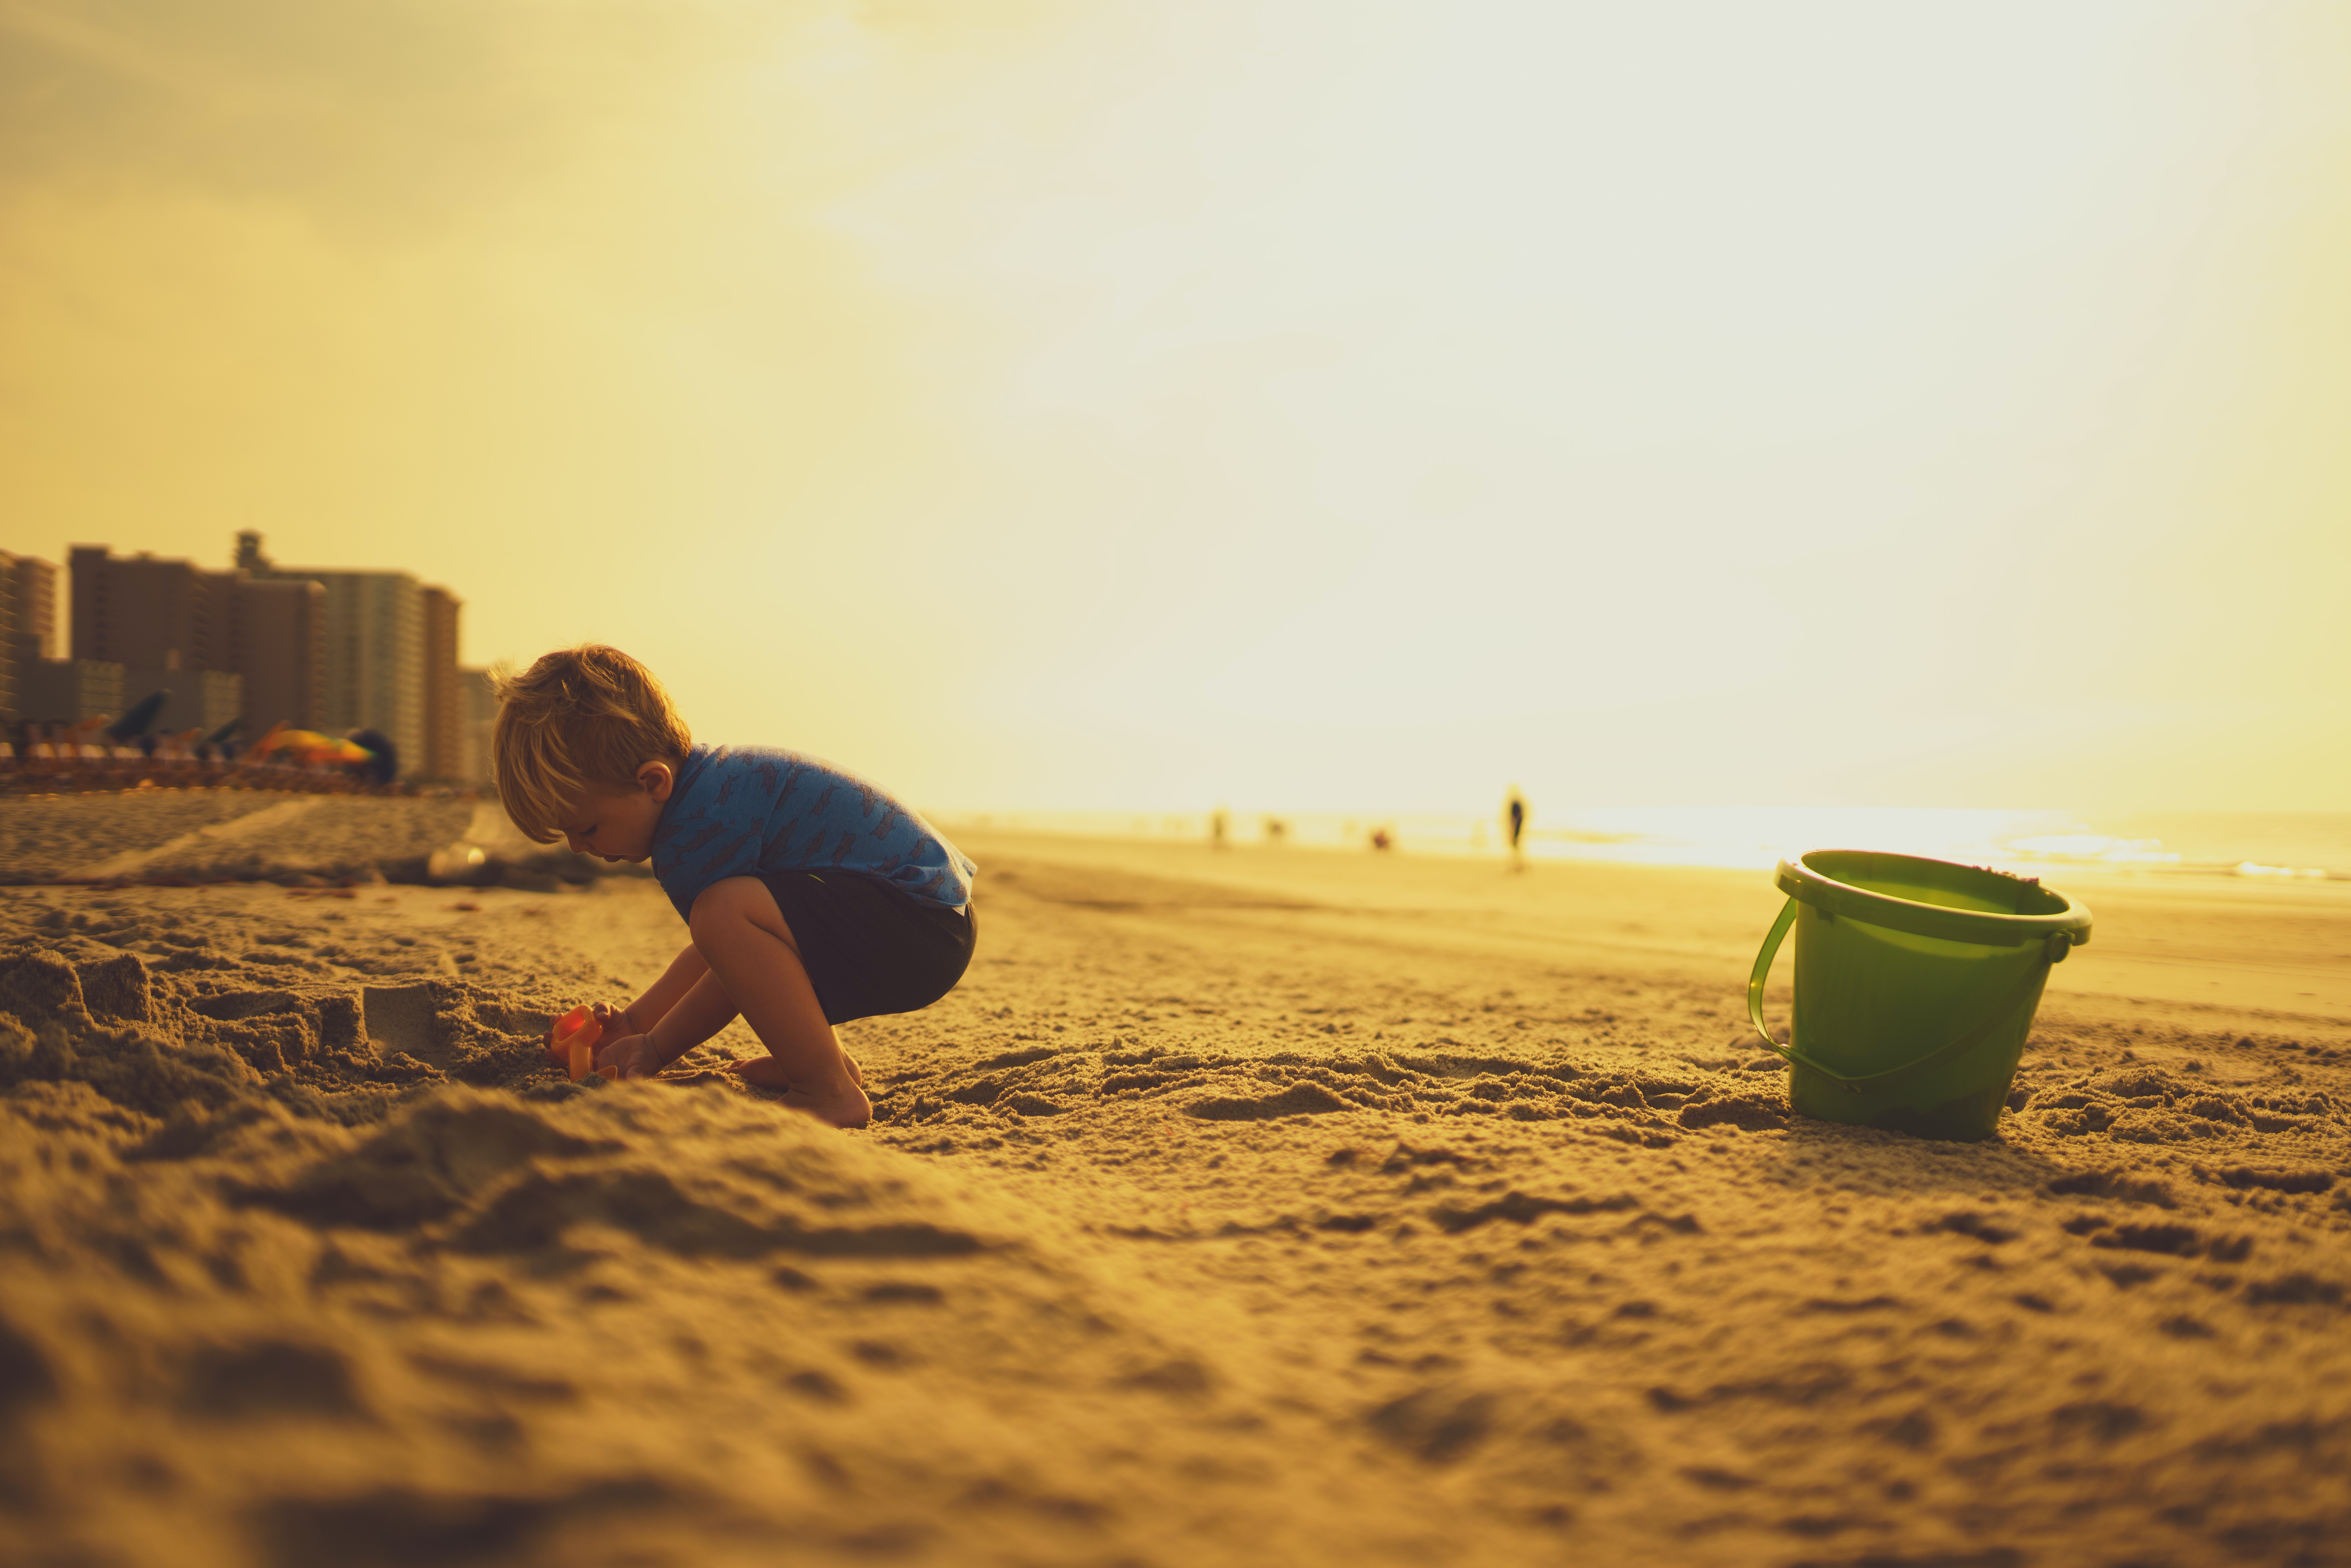 A young boy building sandcastles